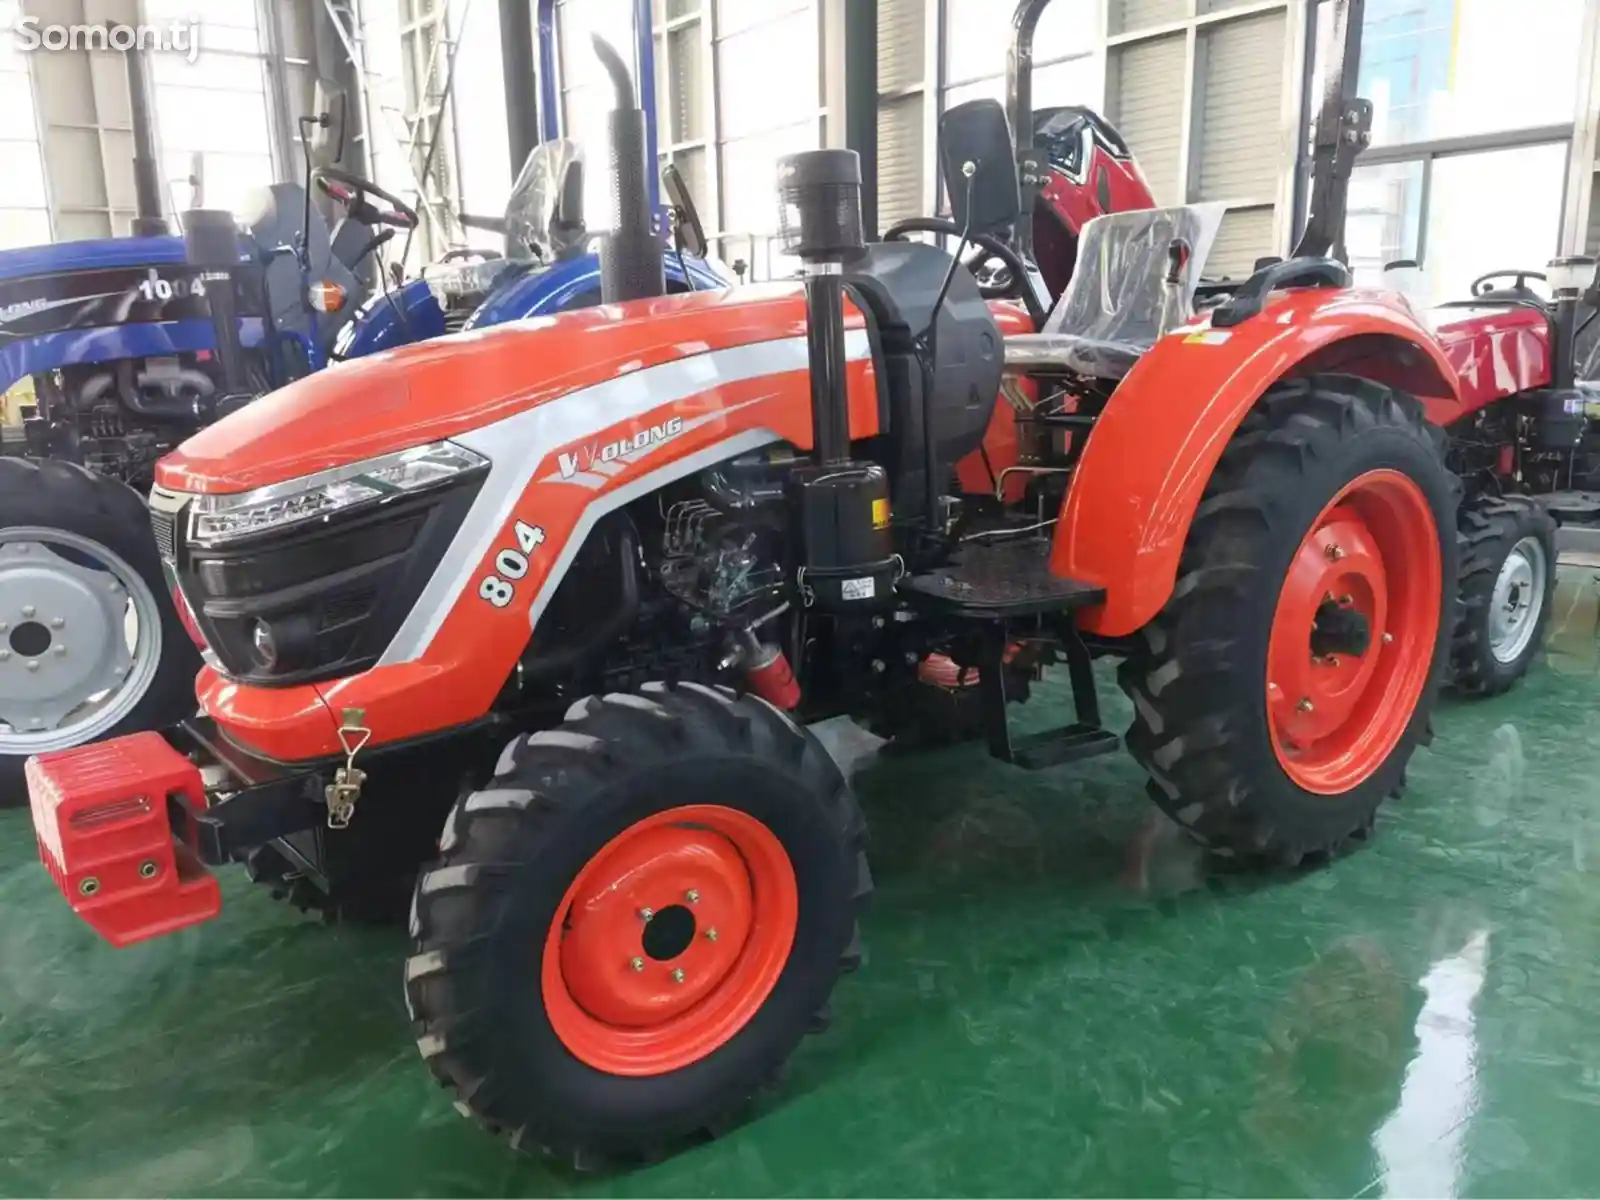 Трактор Wolong 804-1